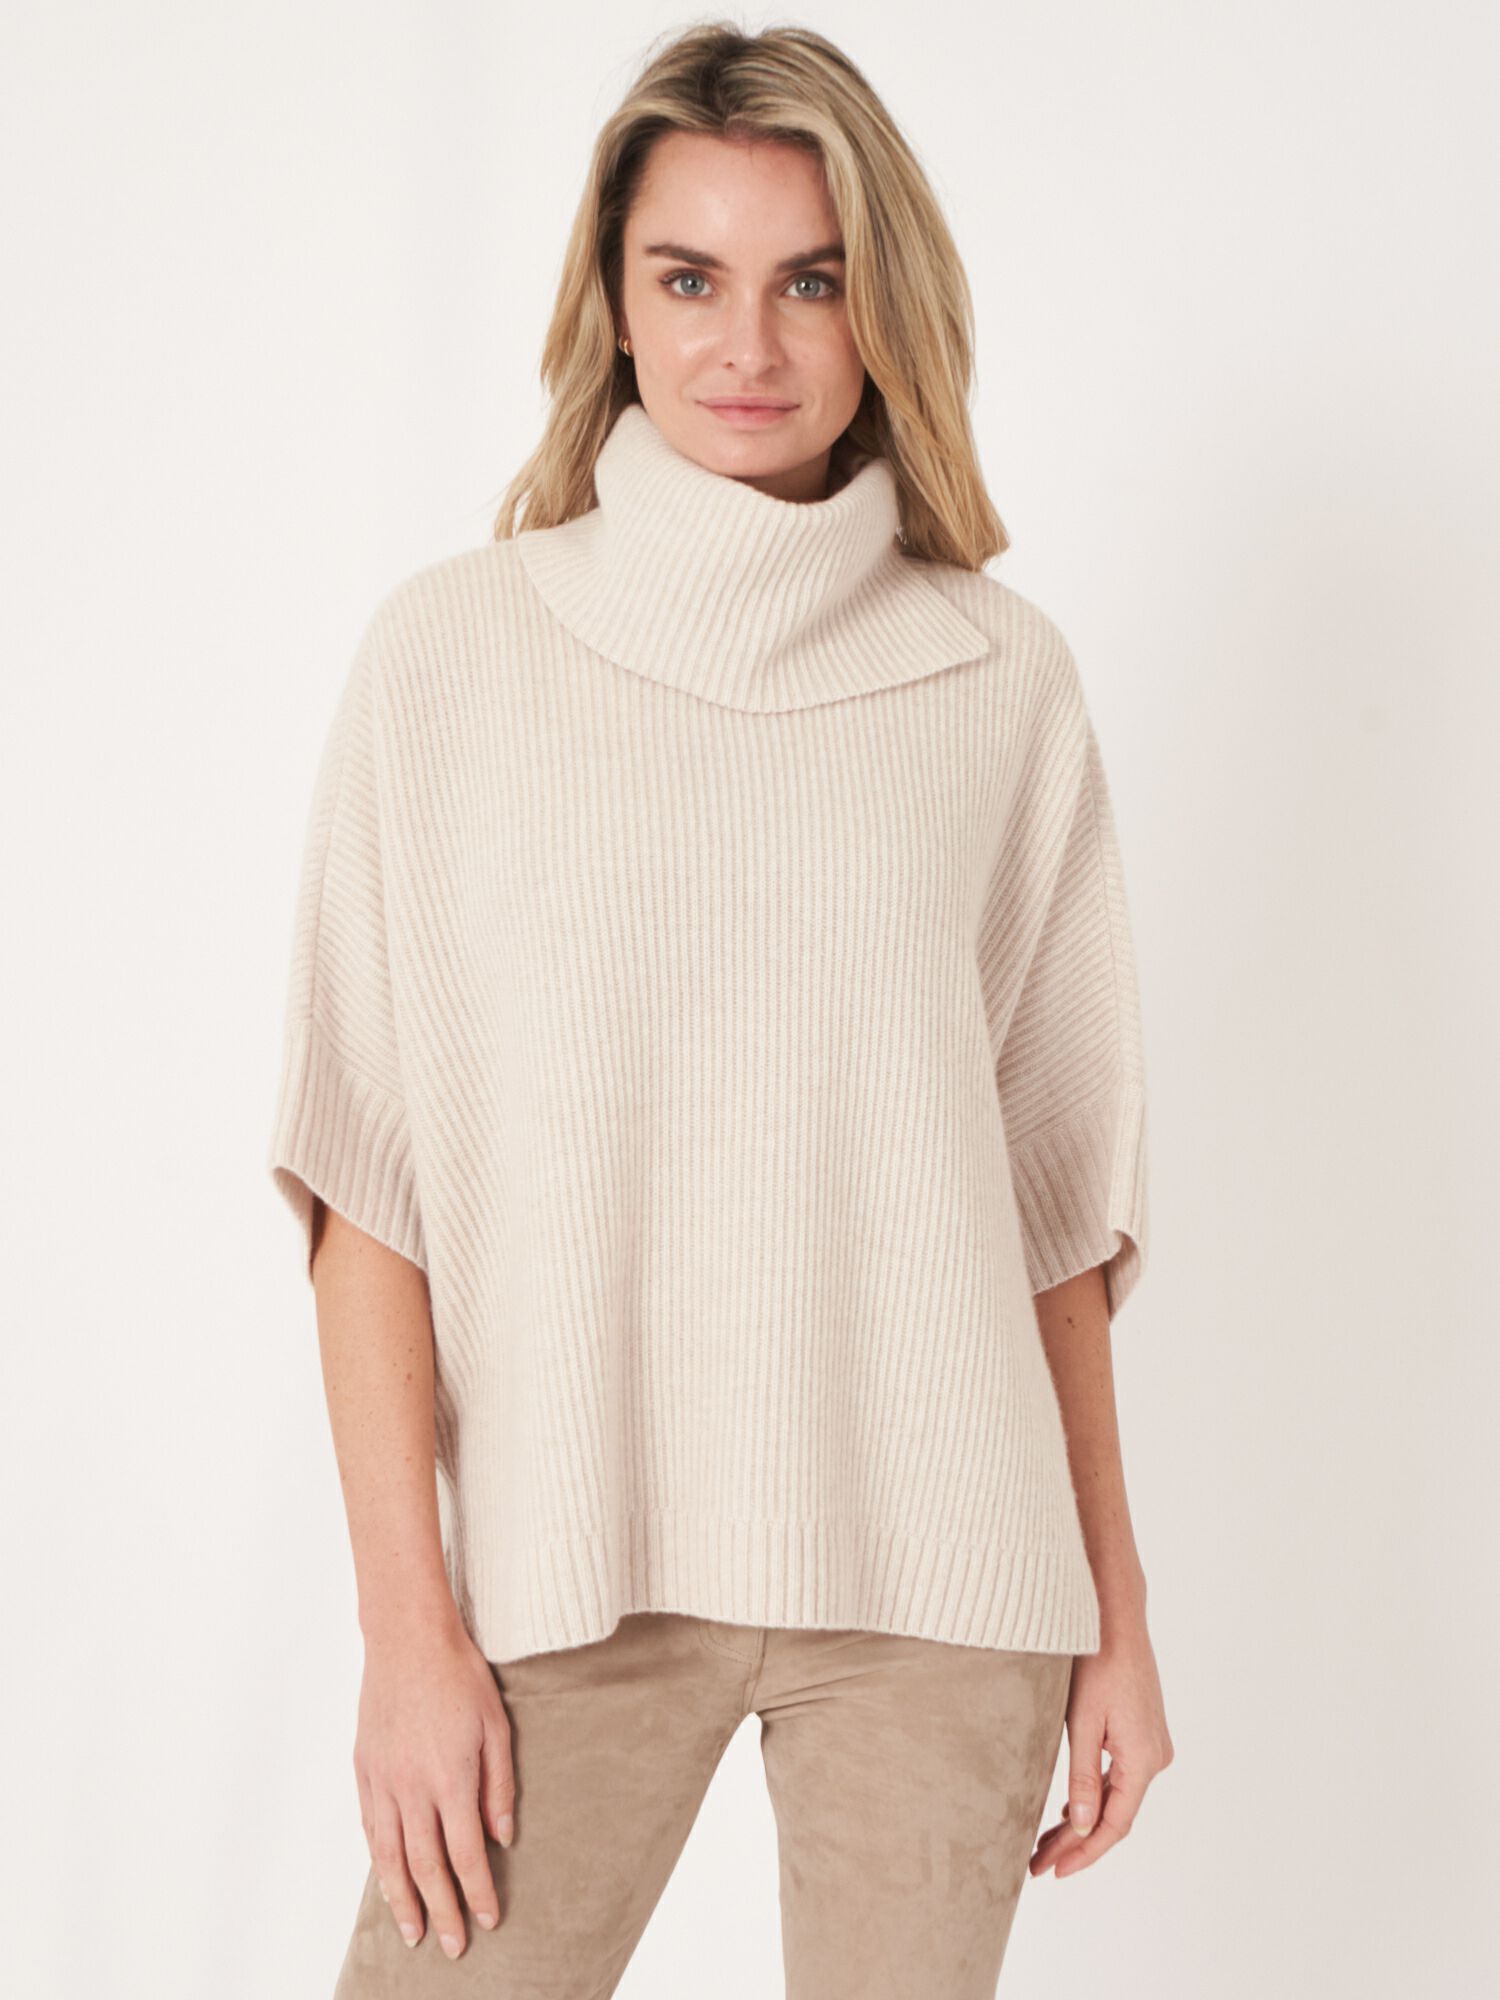 Women's Wide turtleneck poncho sweater